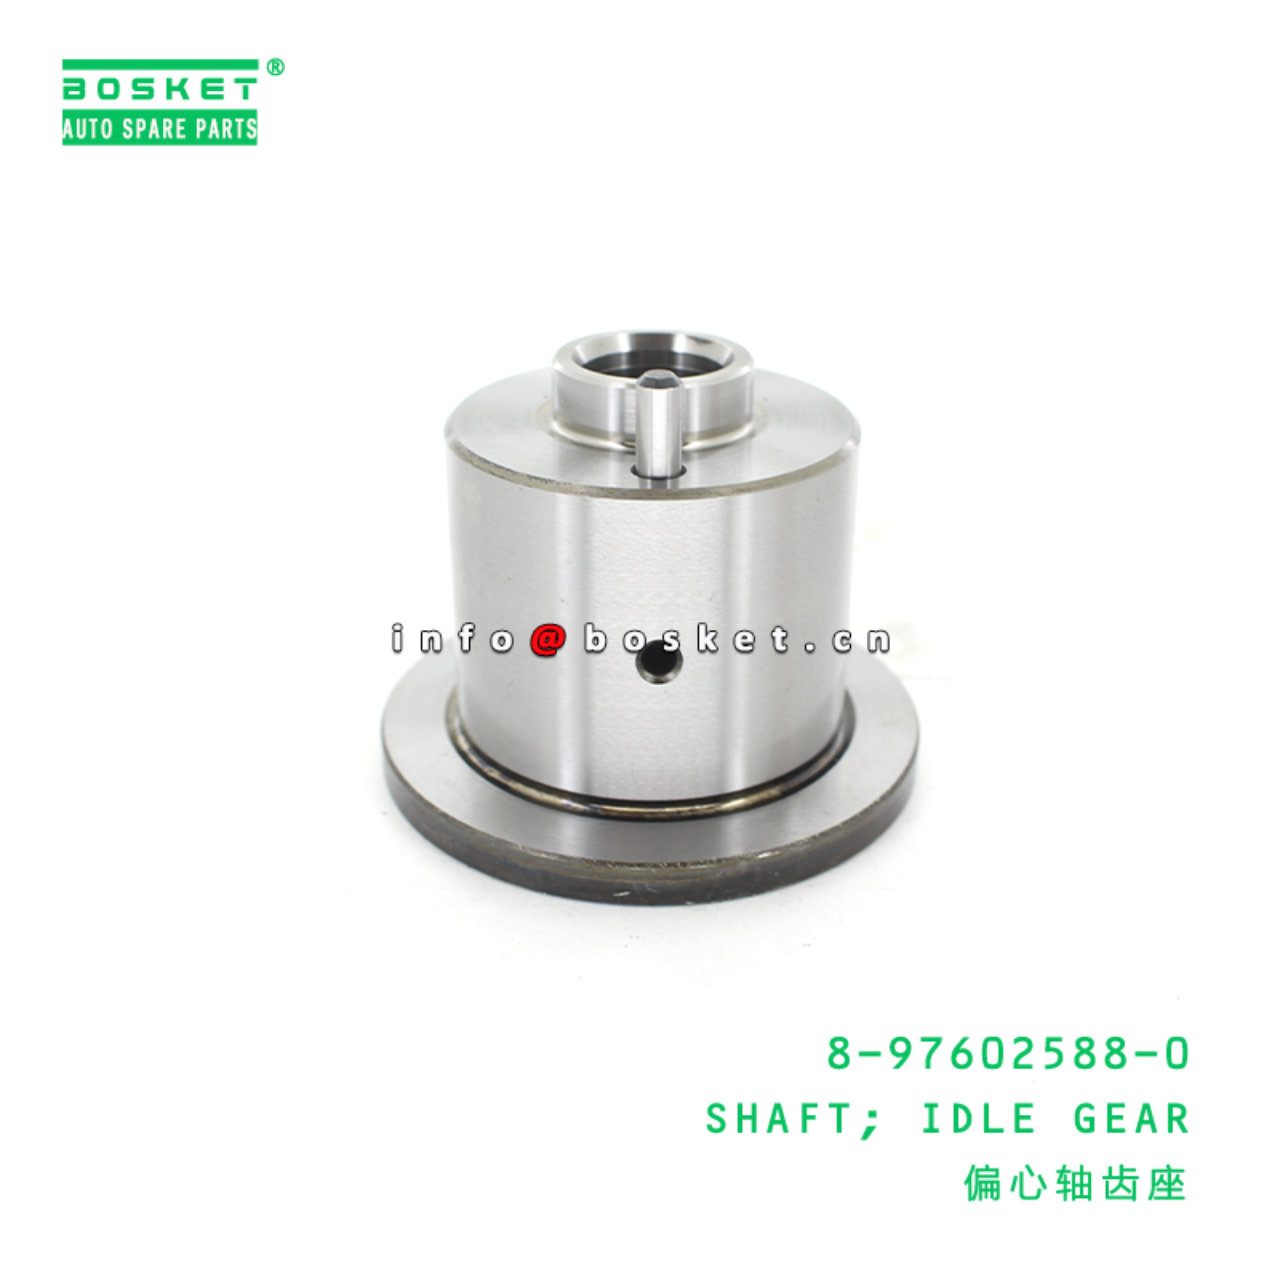 8-97602588-0 Idle Gear Shaft Suitable for ISUZU FVR32 6HE1 8976025880